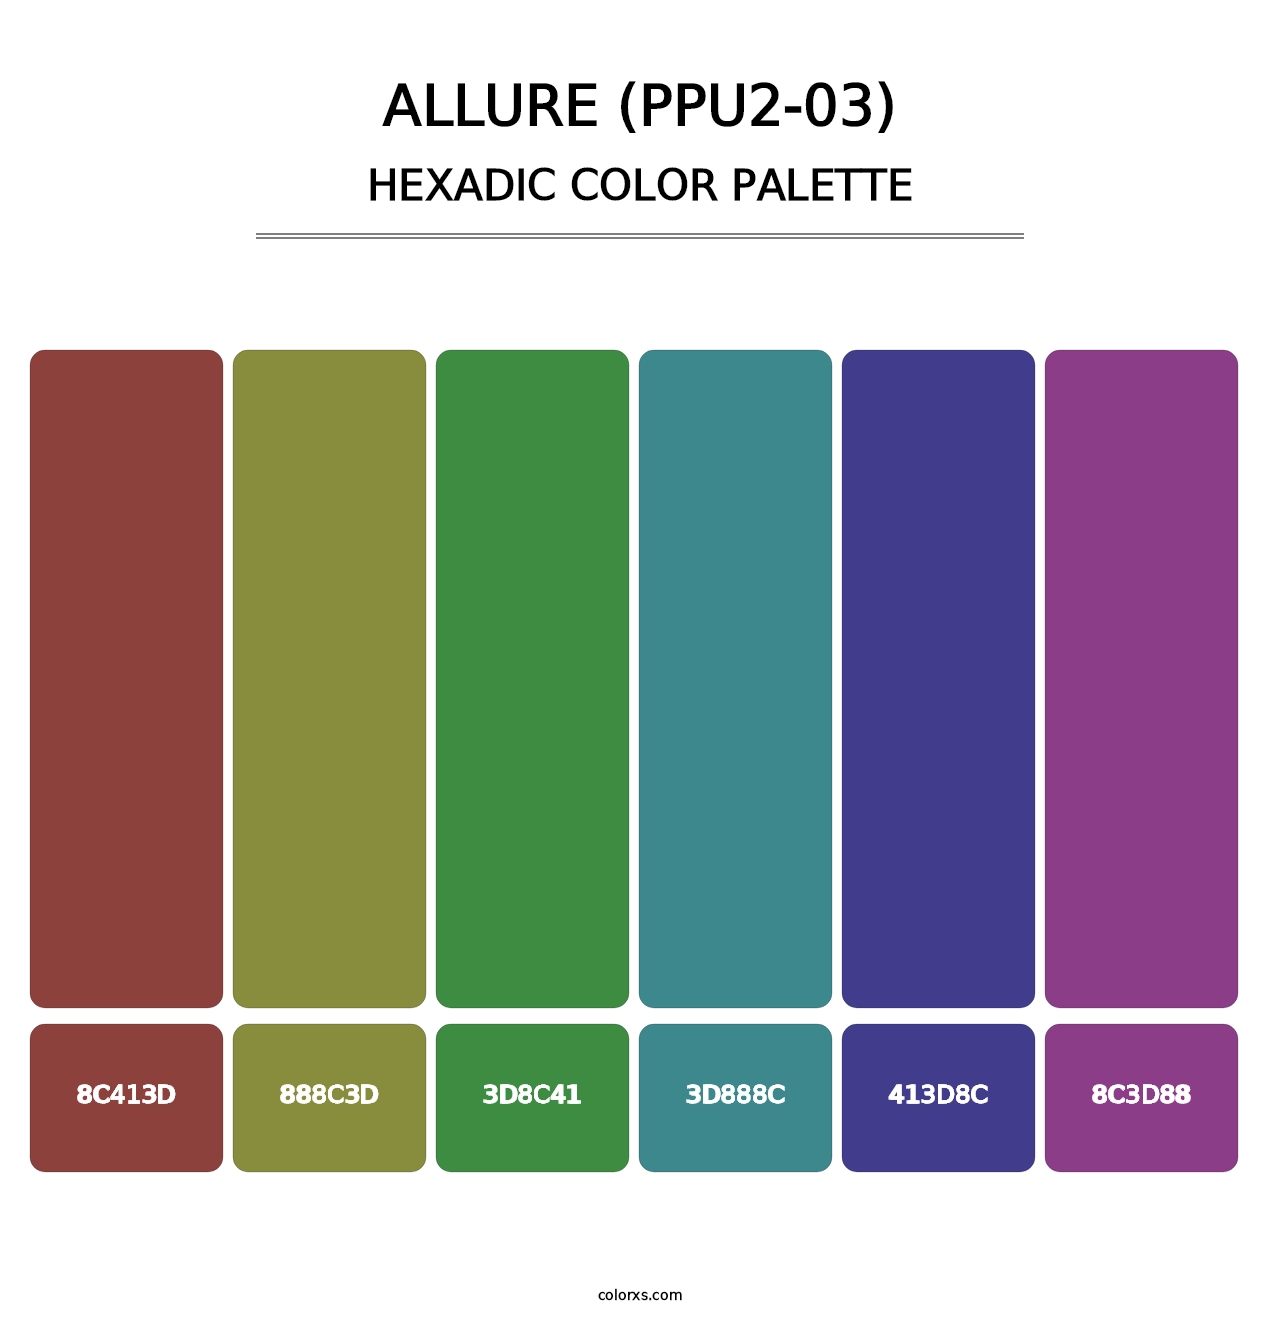 Allure (PPU2-03) - Hexadic Color Palette